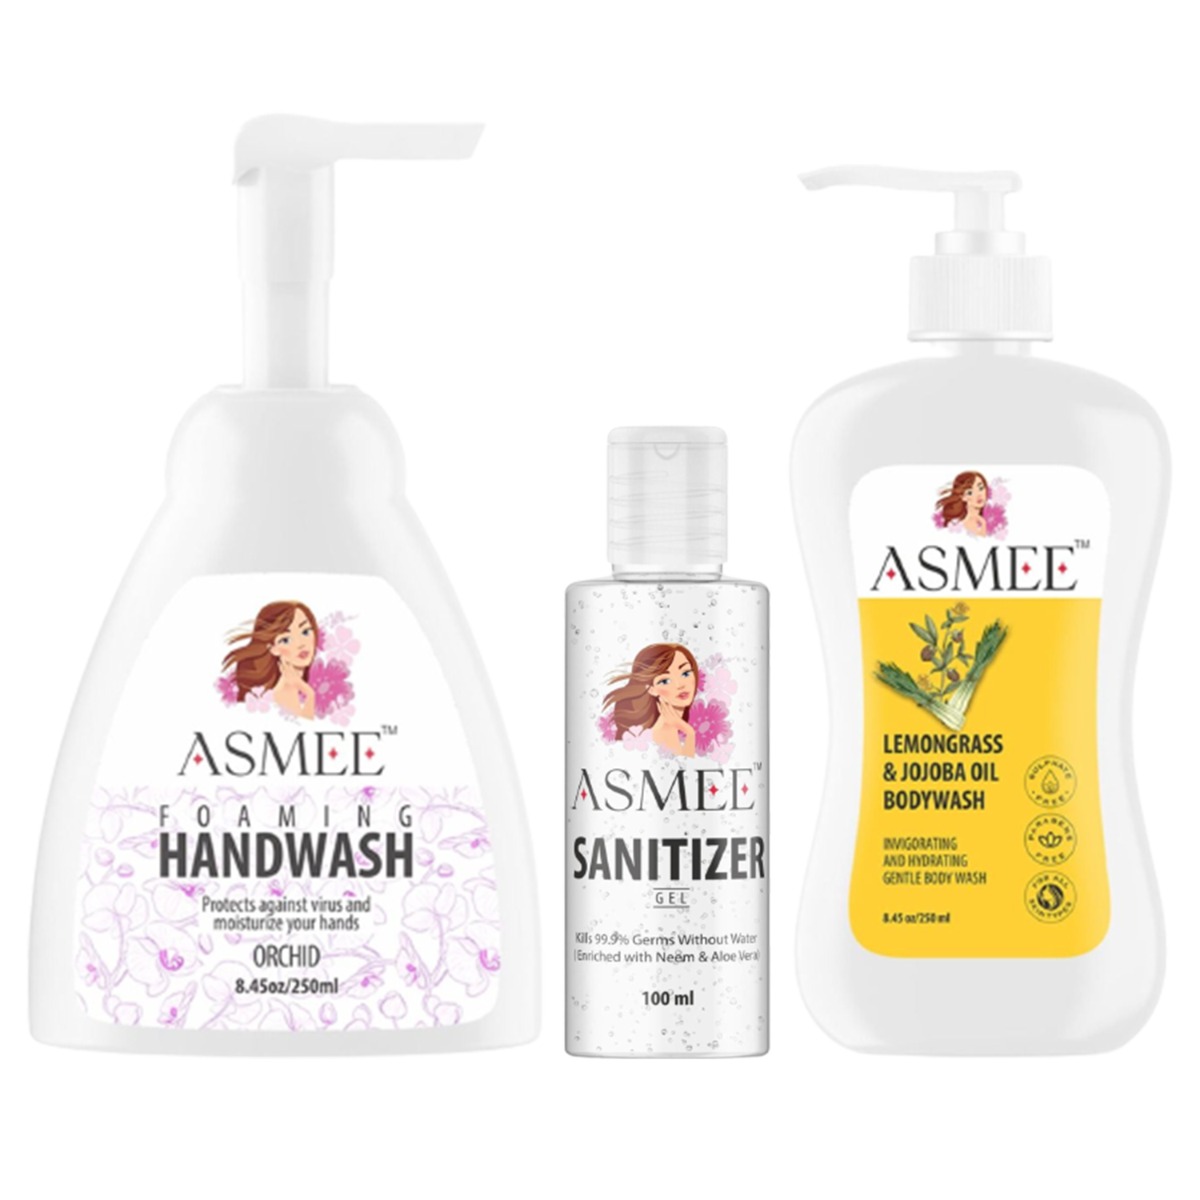 Asmee Lemongrass & Jojoba oil Bodywash + Asmee Hand Sanitizer Gel + Orchid Foaming Handwash, 600ml